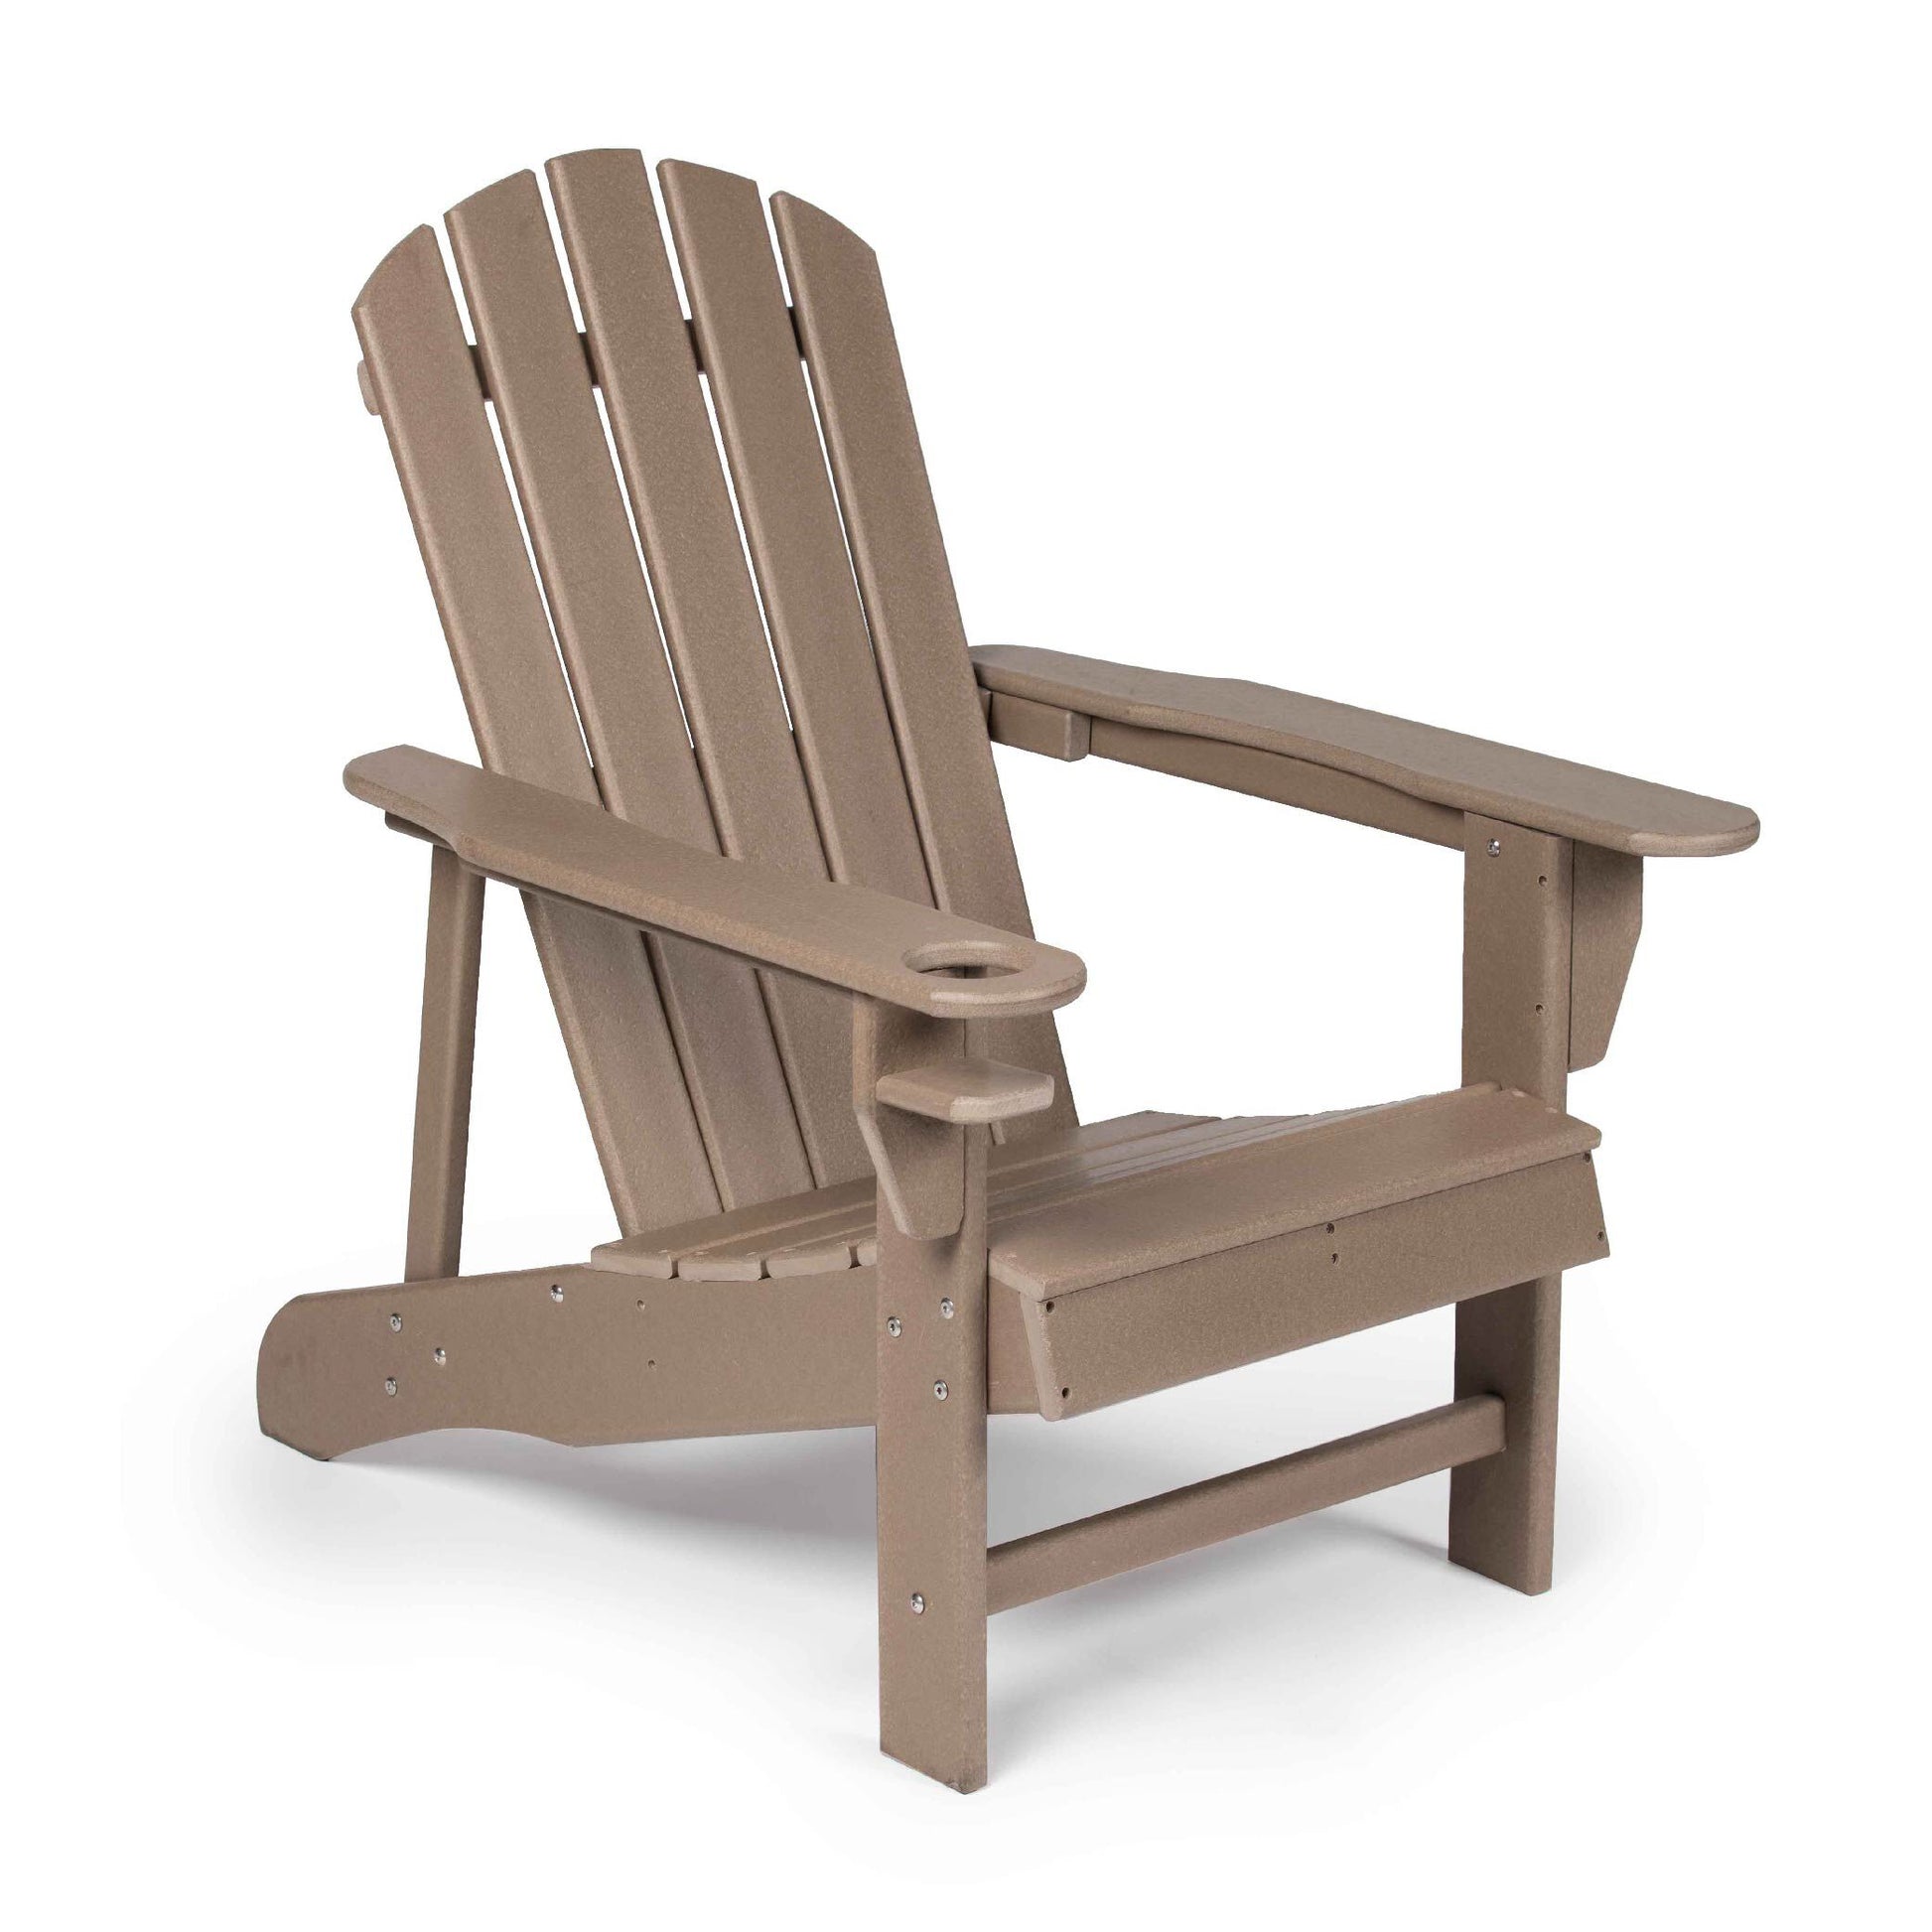 Everwood Hilltop Adirondack Chair - Adirondack Chair Color: Driftwood | Driftwood